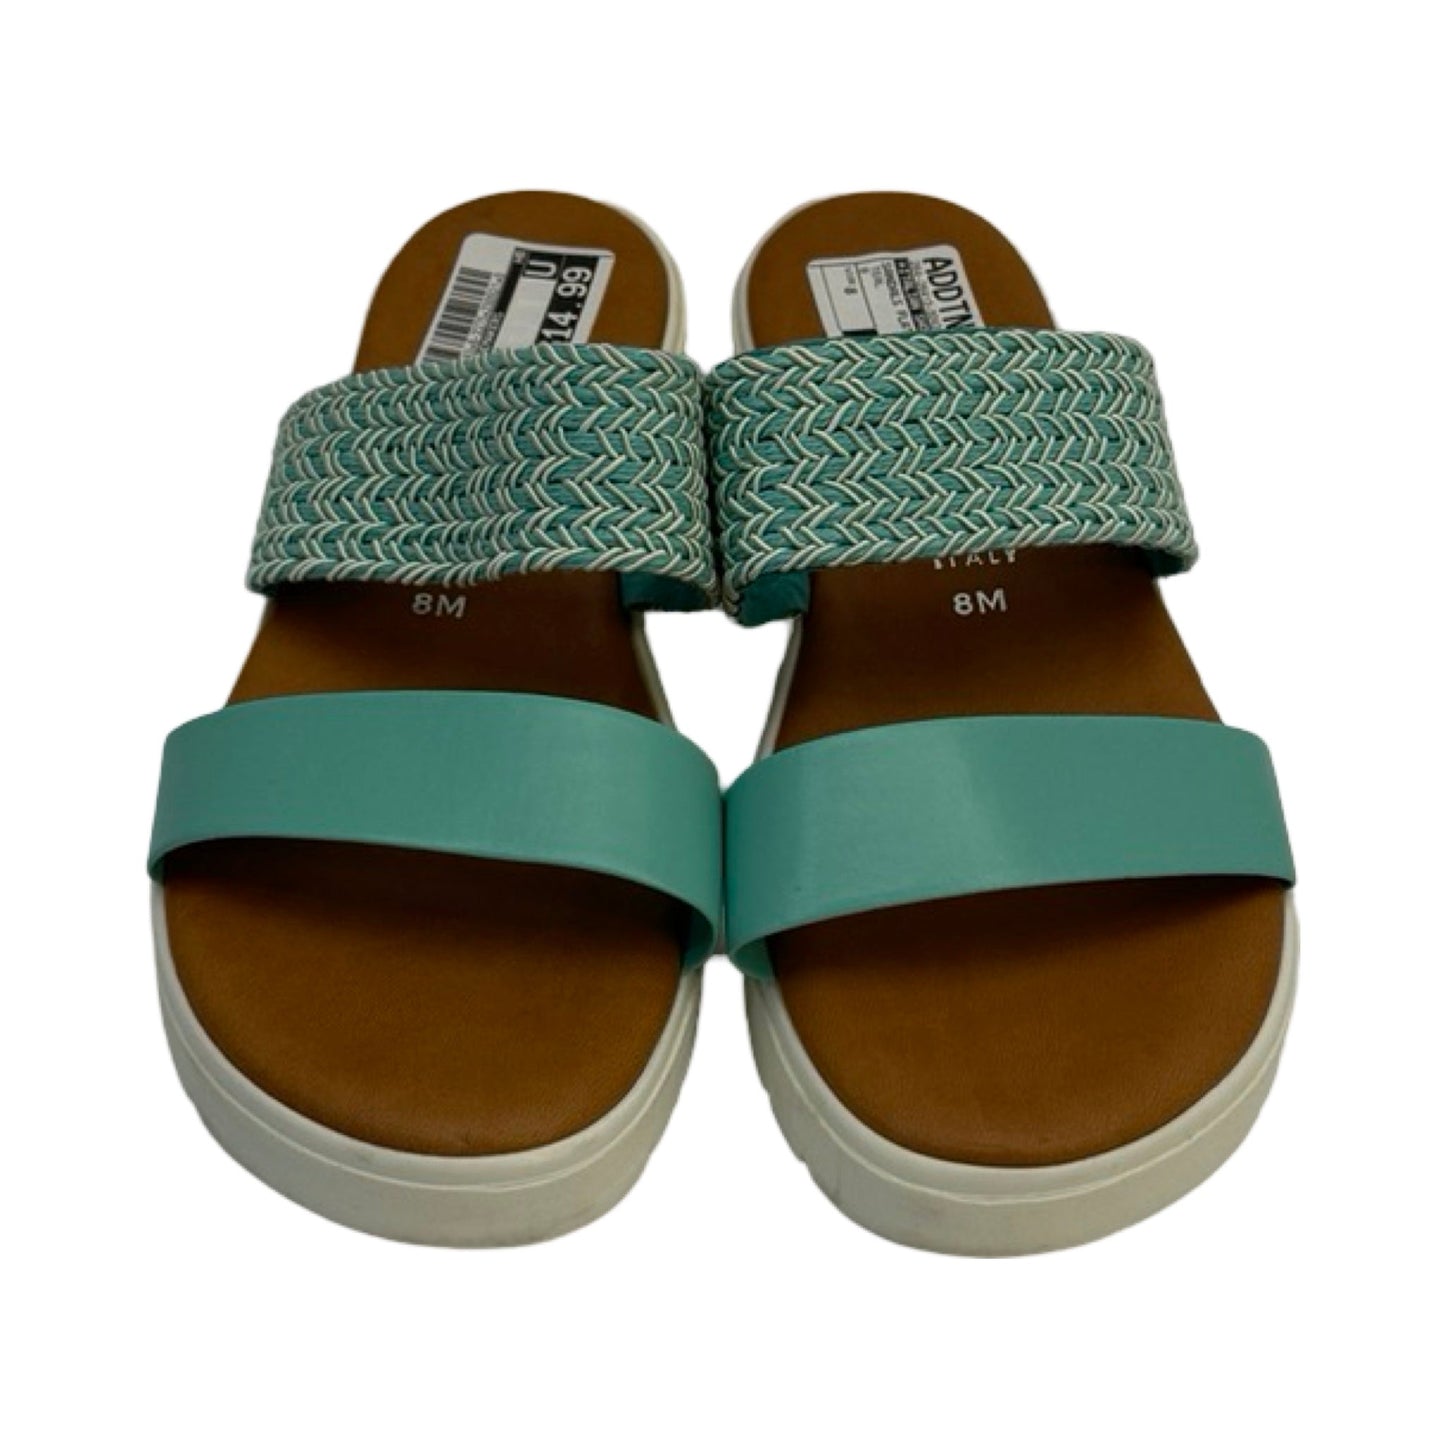 Teal Sandals Flats Italian Shoemakers, Size 8